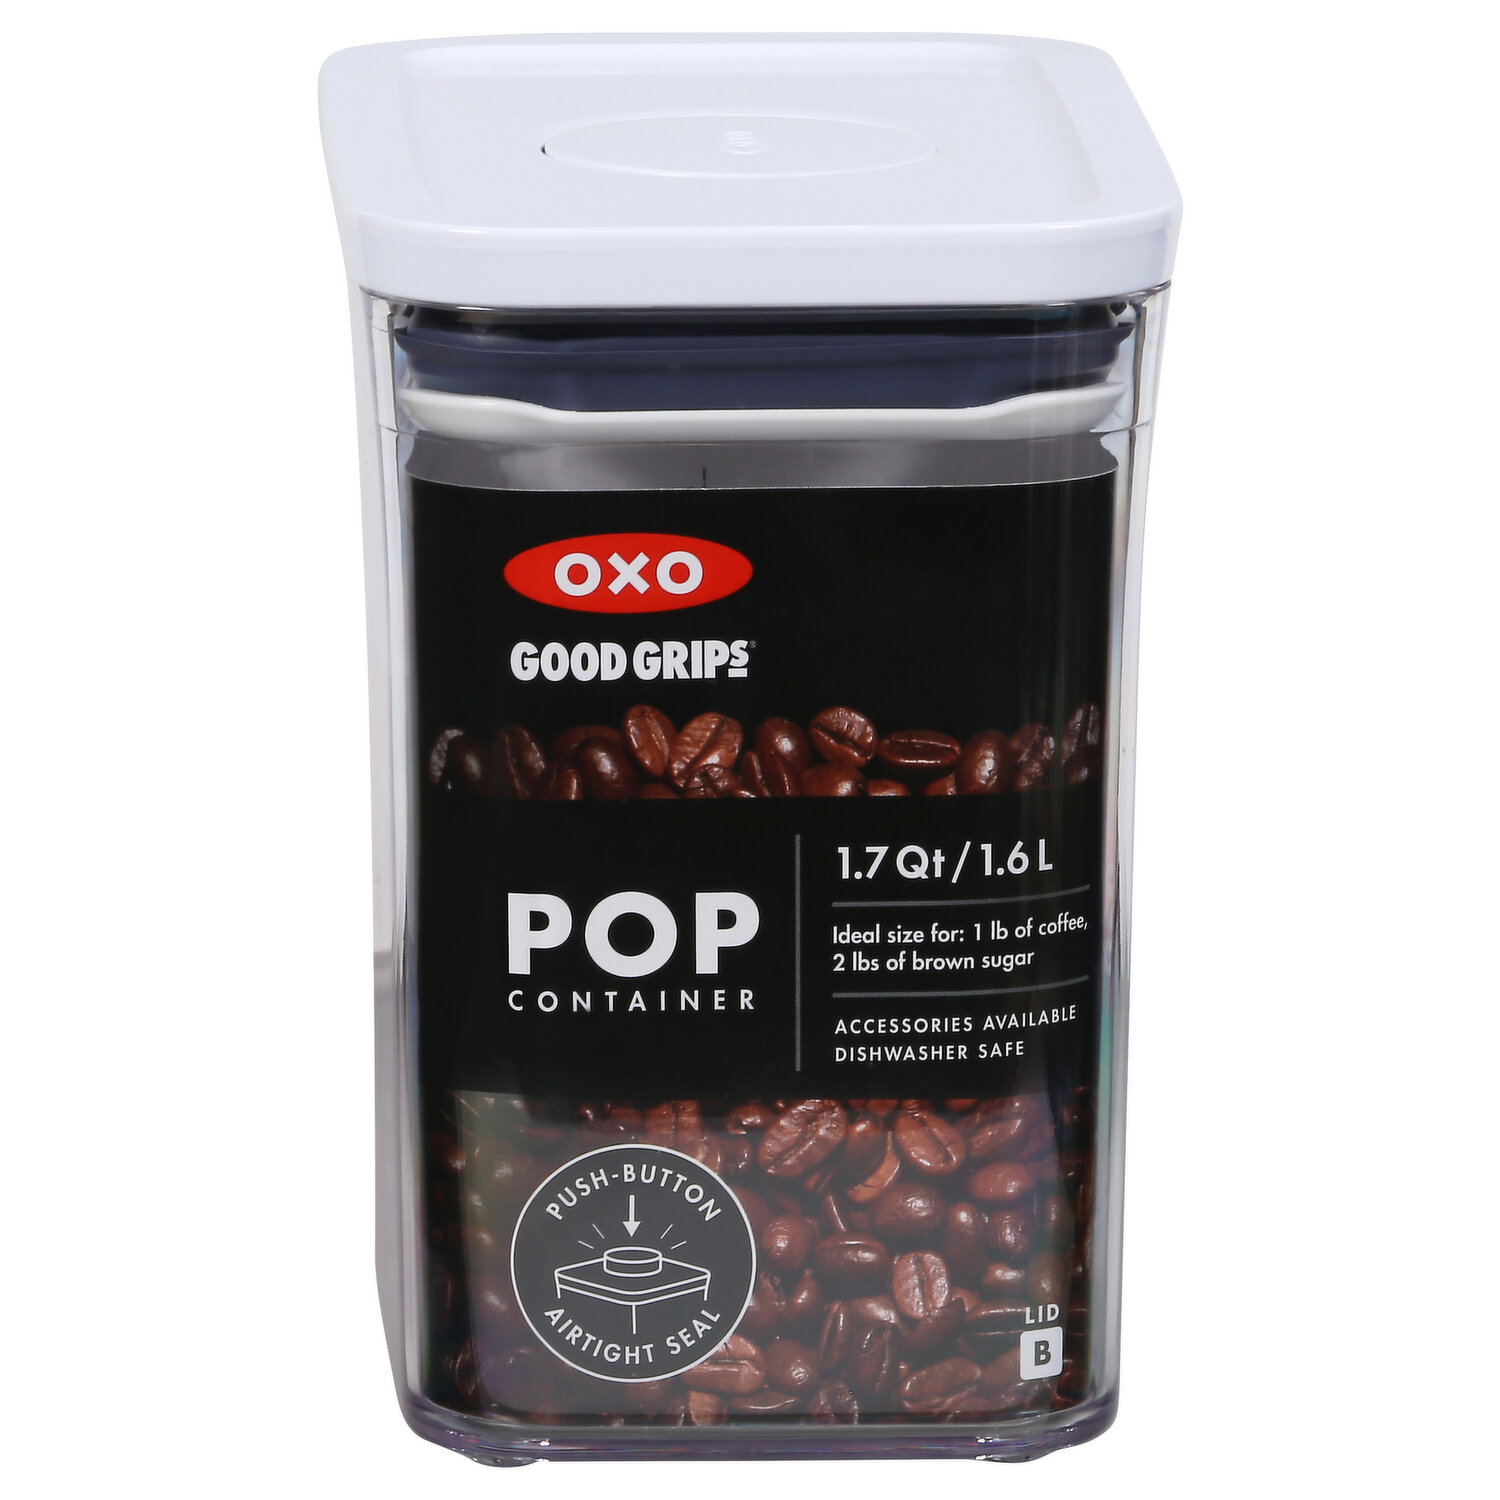 Oxo Good Grips Pop Container, Lid C, 2.3 Quart